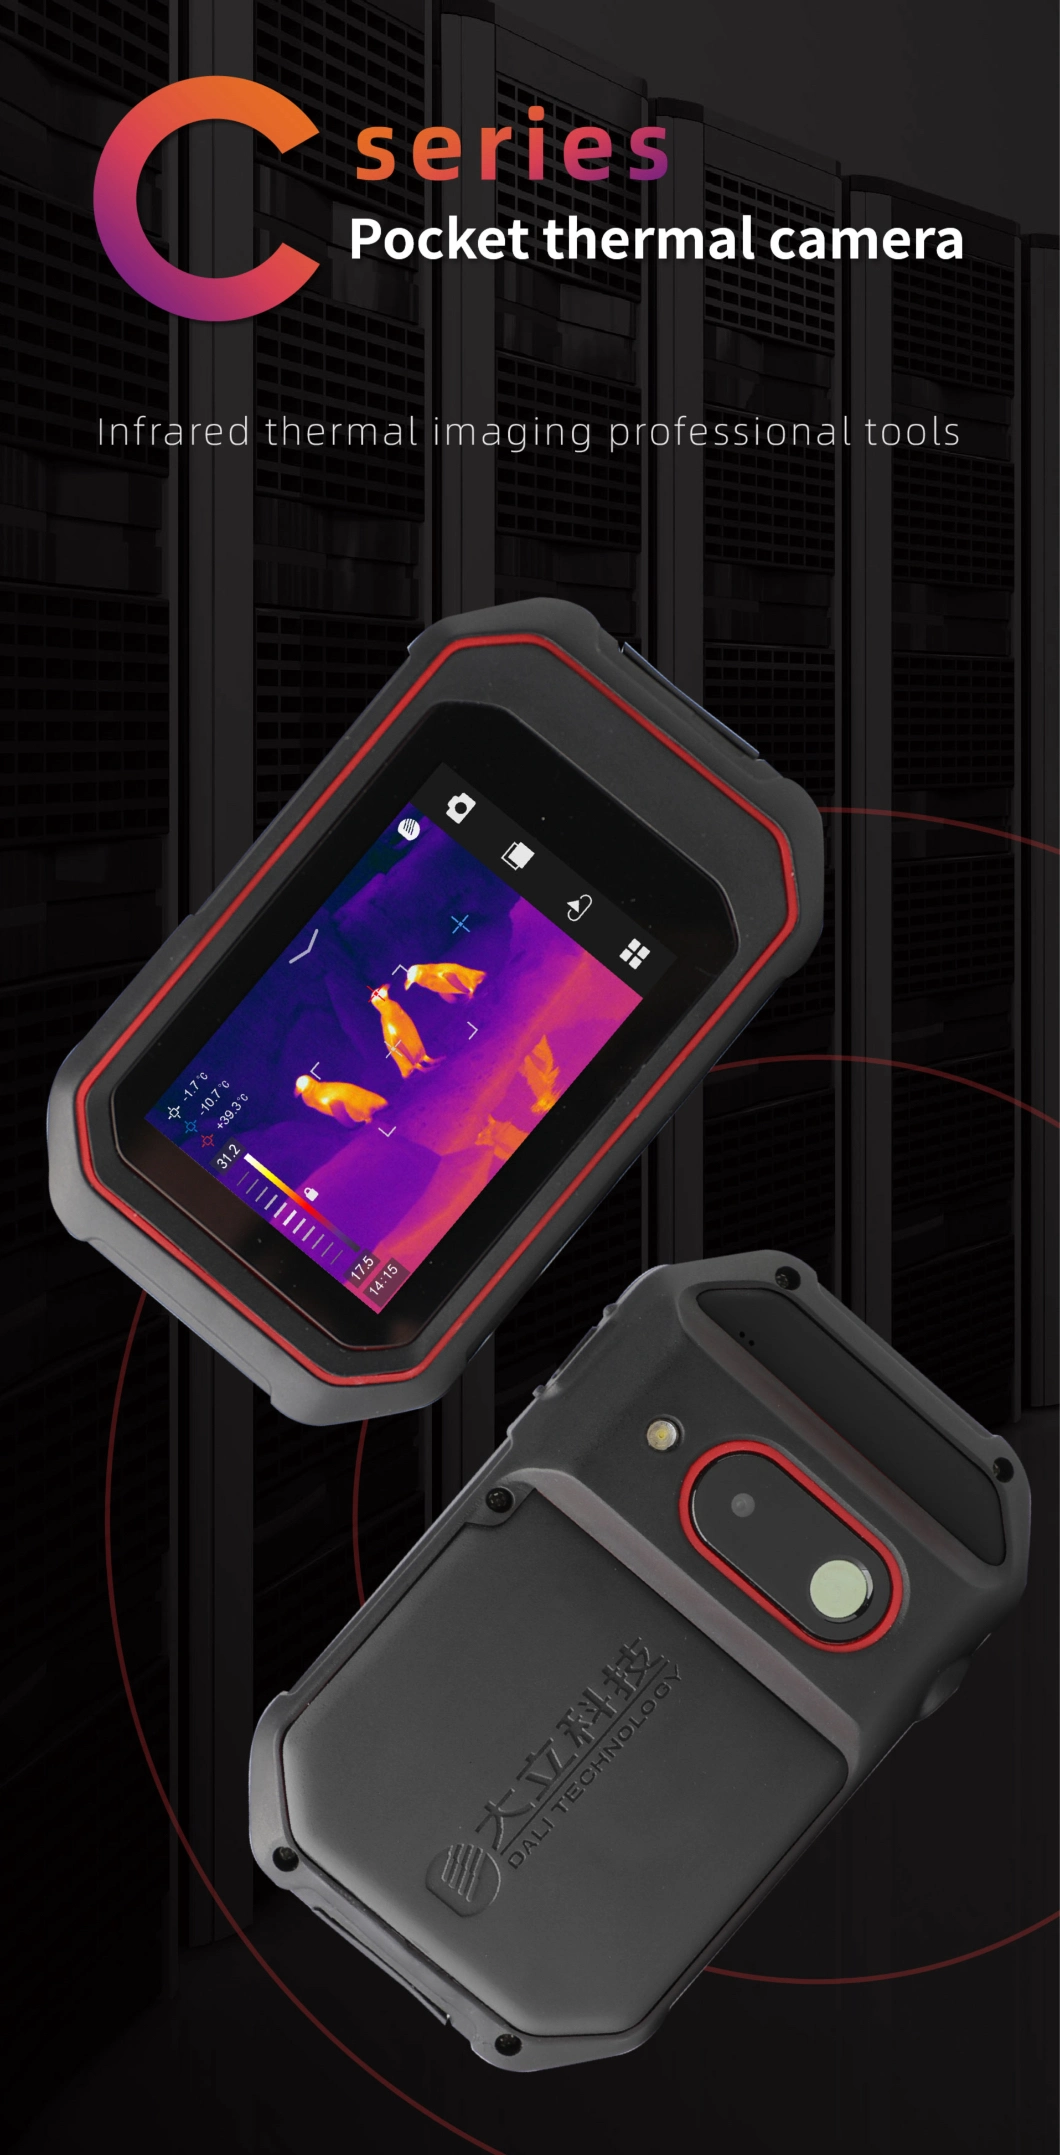 IR Handheld Pocket Thermal Imaging Camera